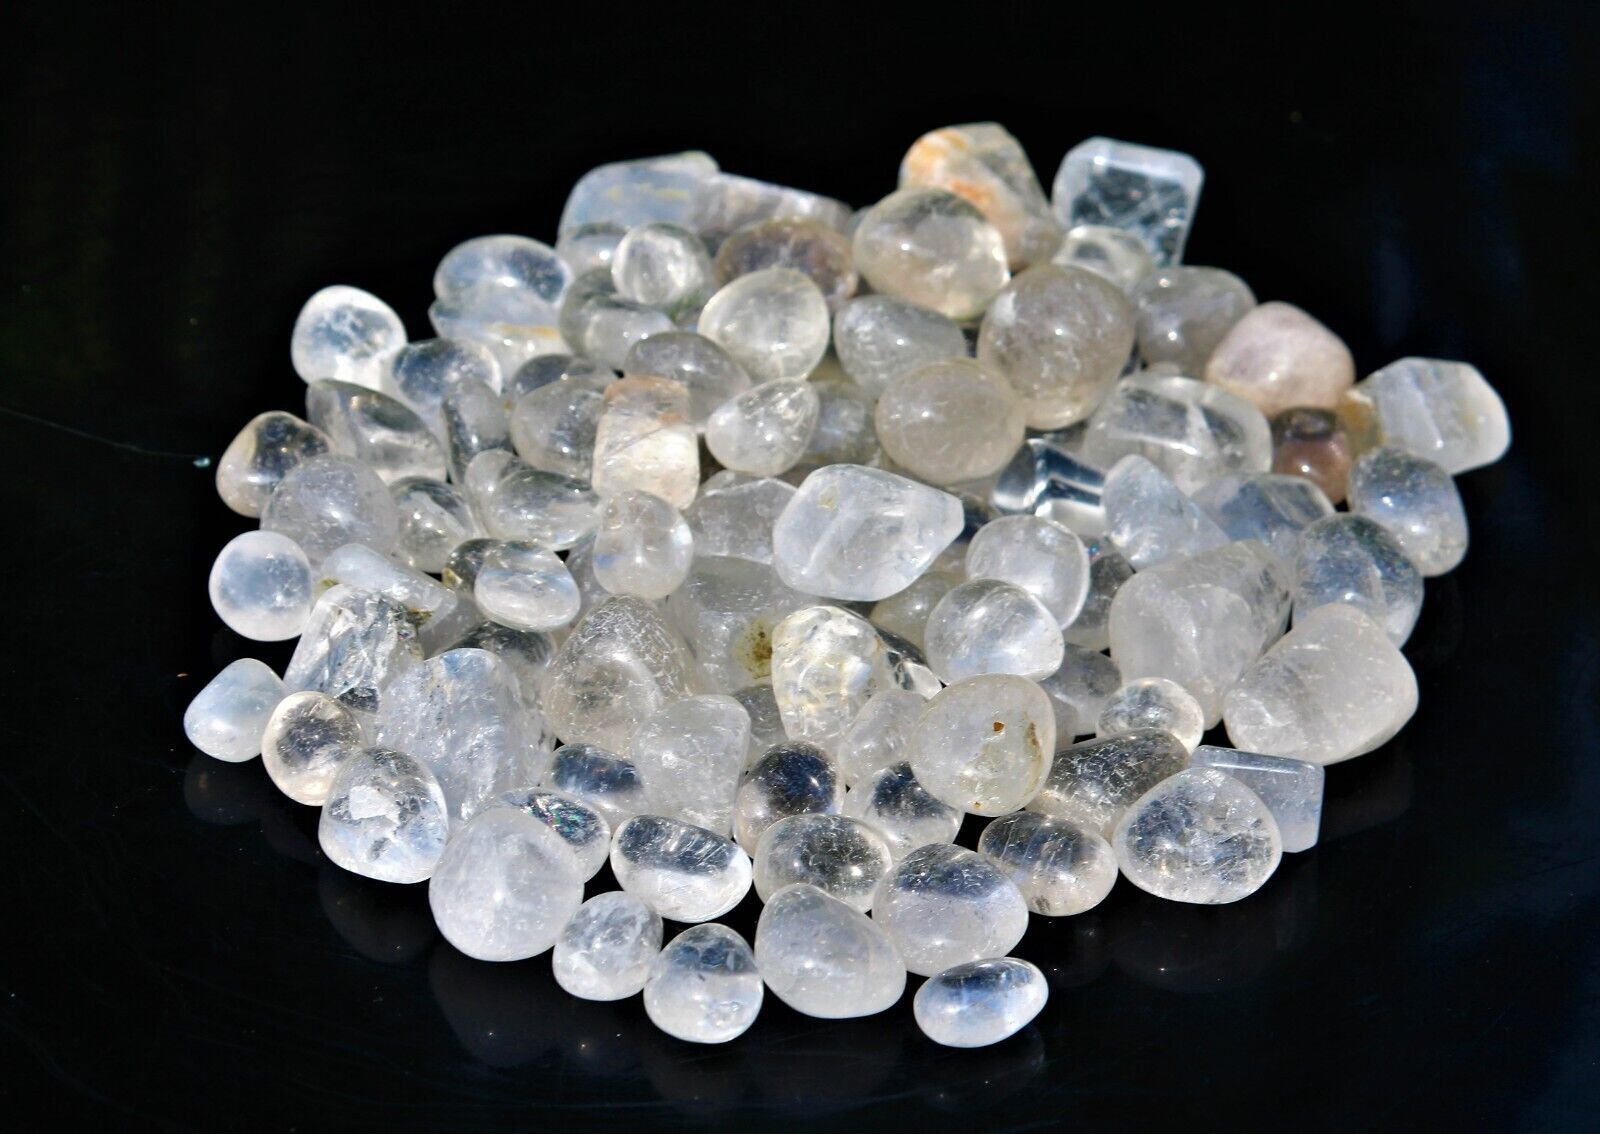 Lot 10 kg Tumbled Pebbles Stones Clear Crystal Quartz Healing Energy